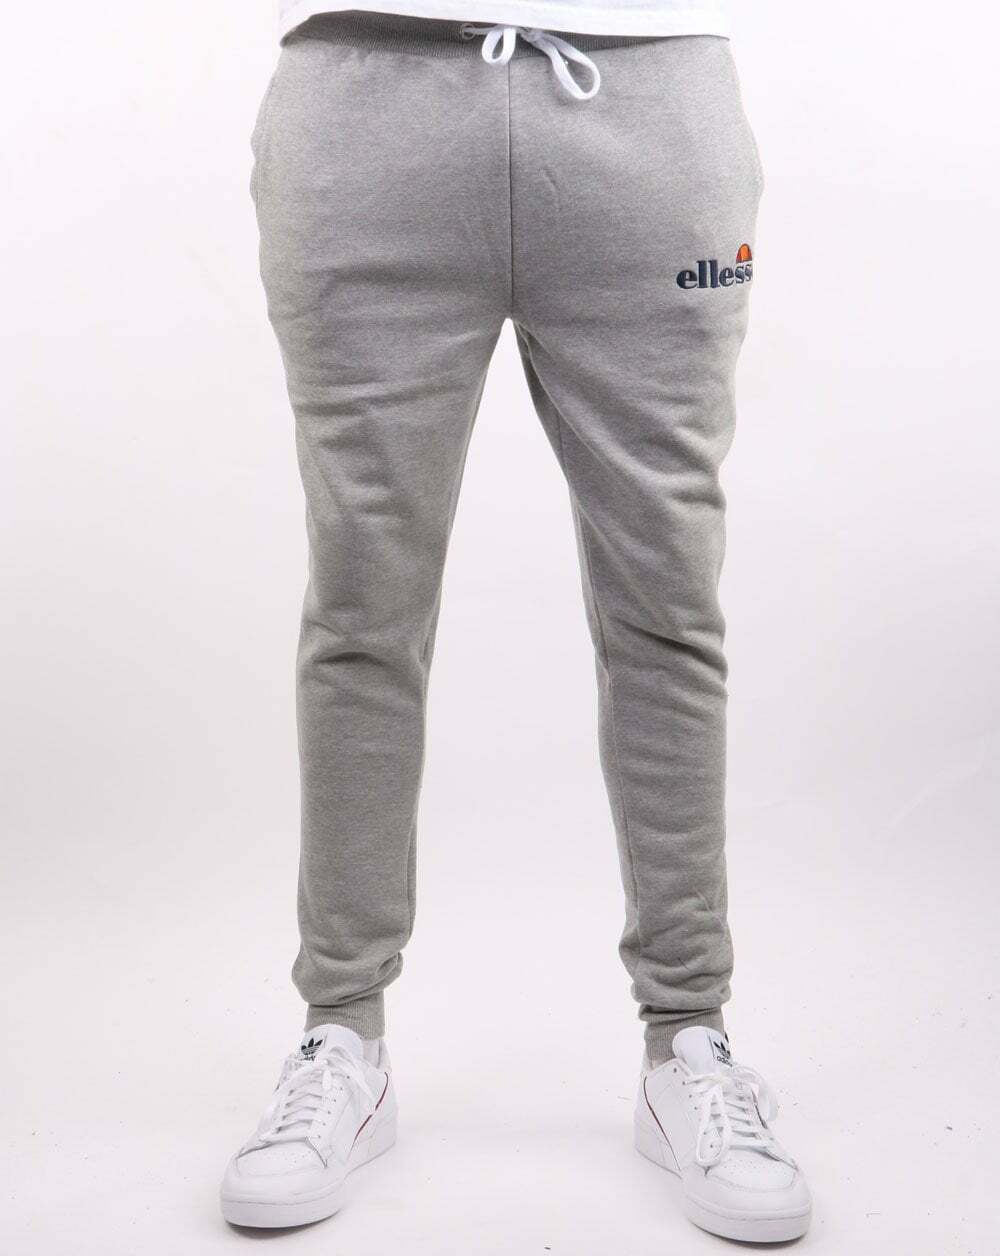 Ellesse Jog Pants in Grey Marl - tracksuit bottoms, joggers, sweatpants |  eBay